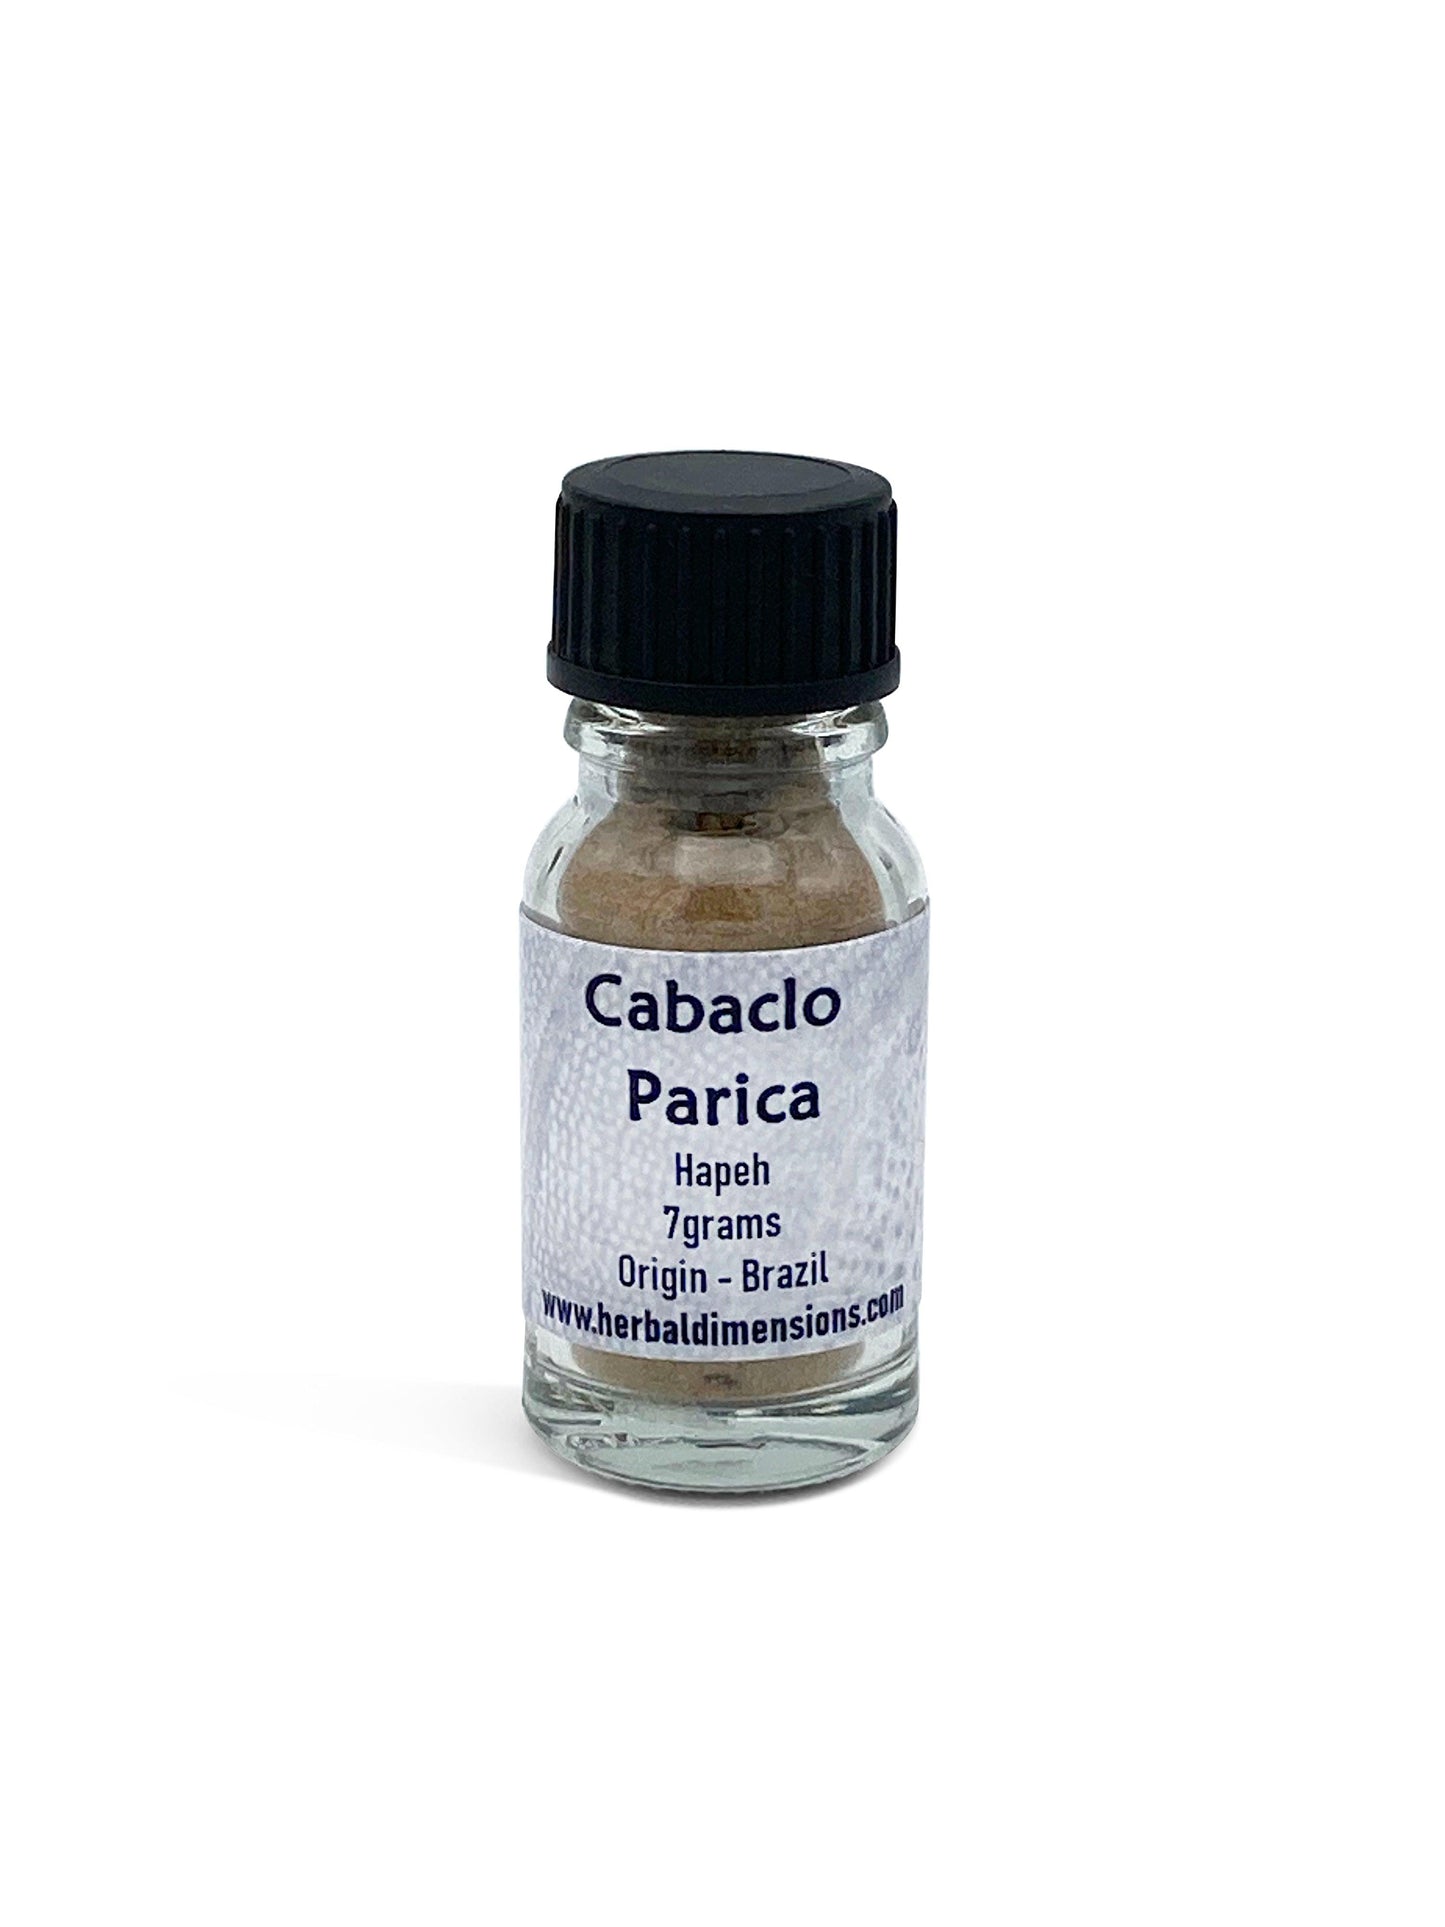 Cabaclo parica - Herbaldimensions.com